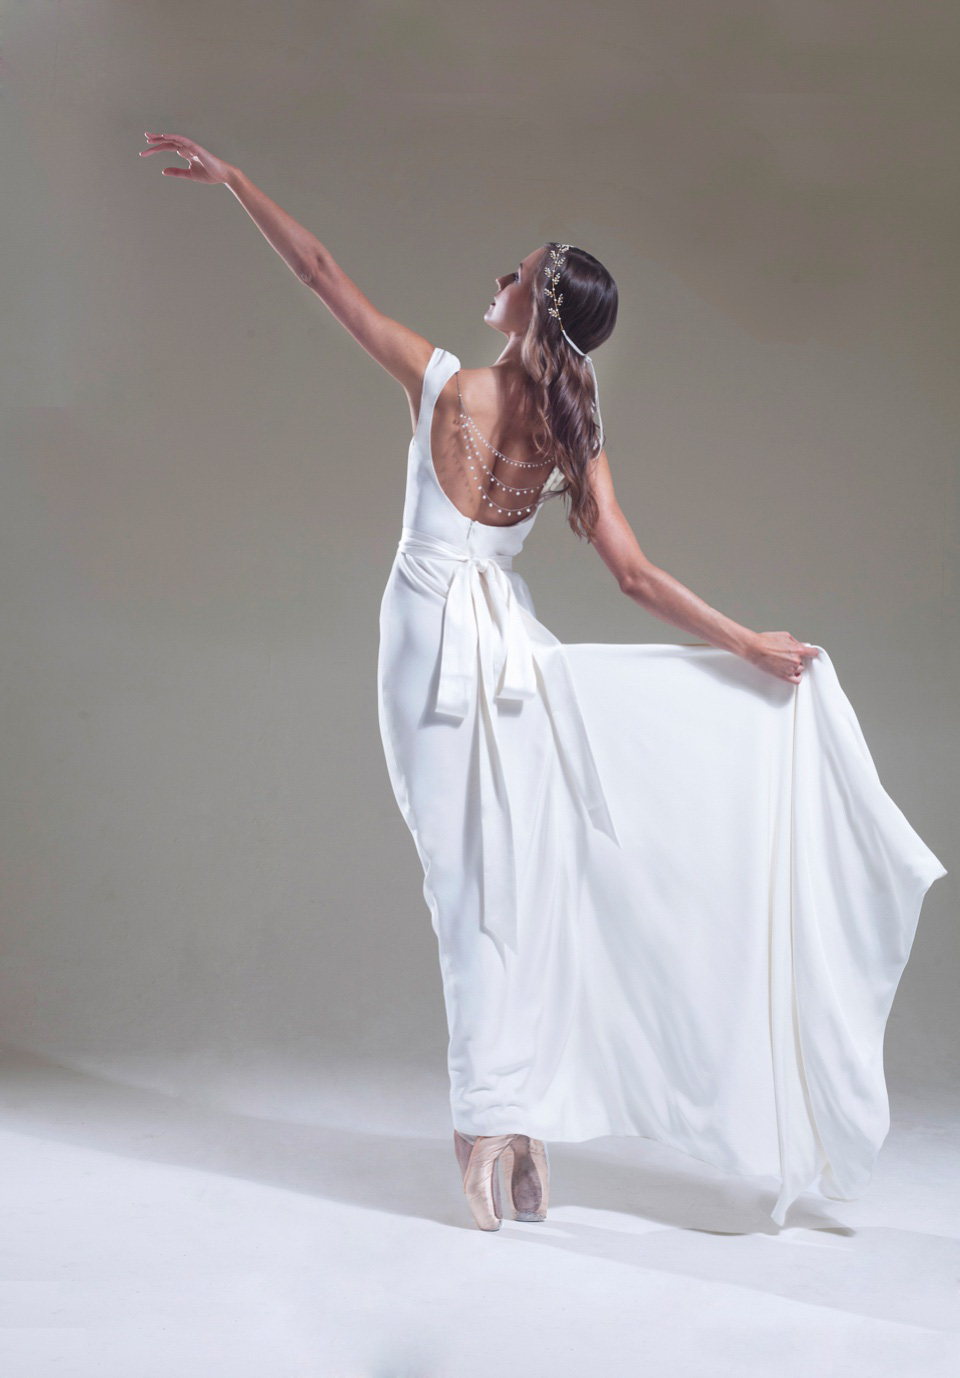 En Pointe – The Graceful & Elegant New Wedding Gown Collection From Sabina Motasem, London